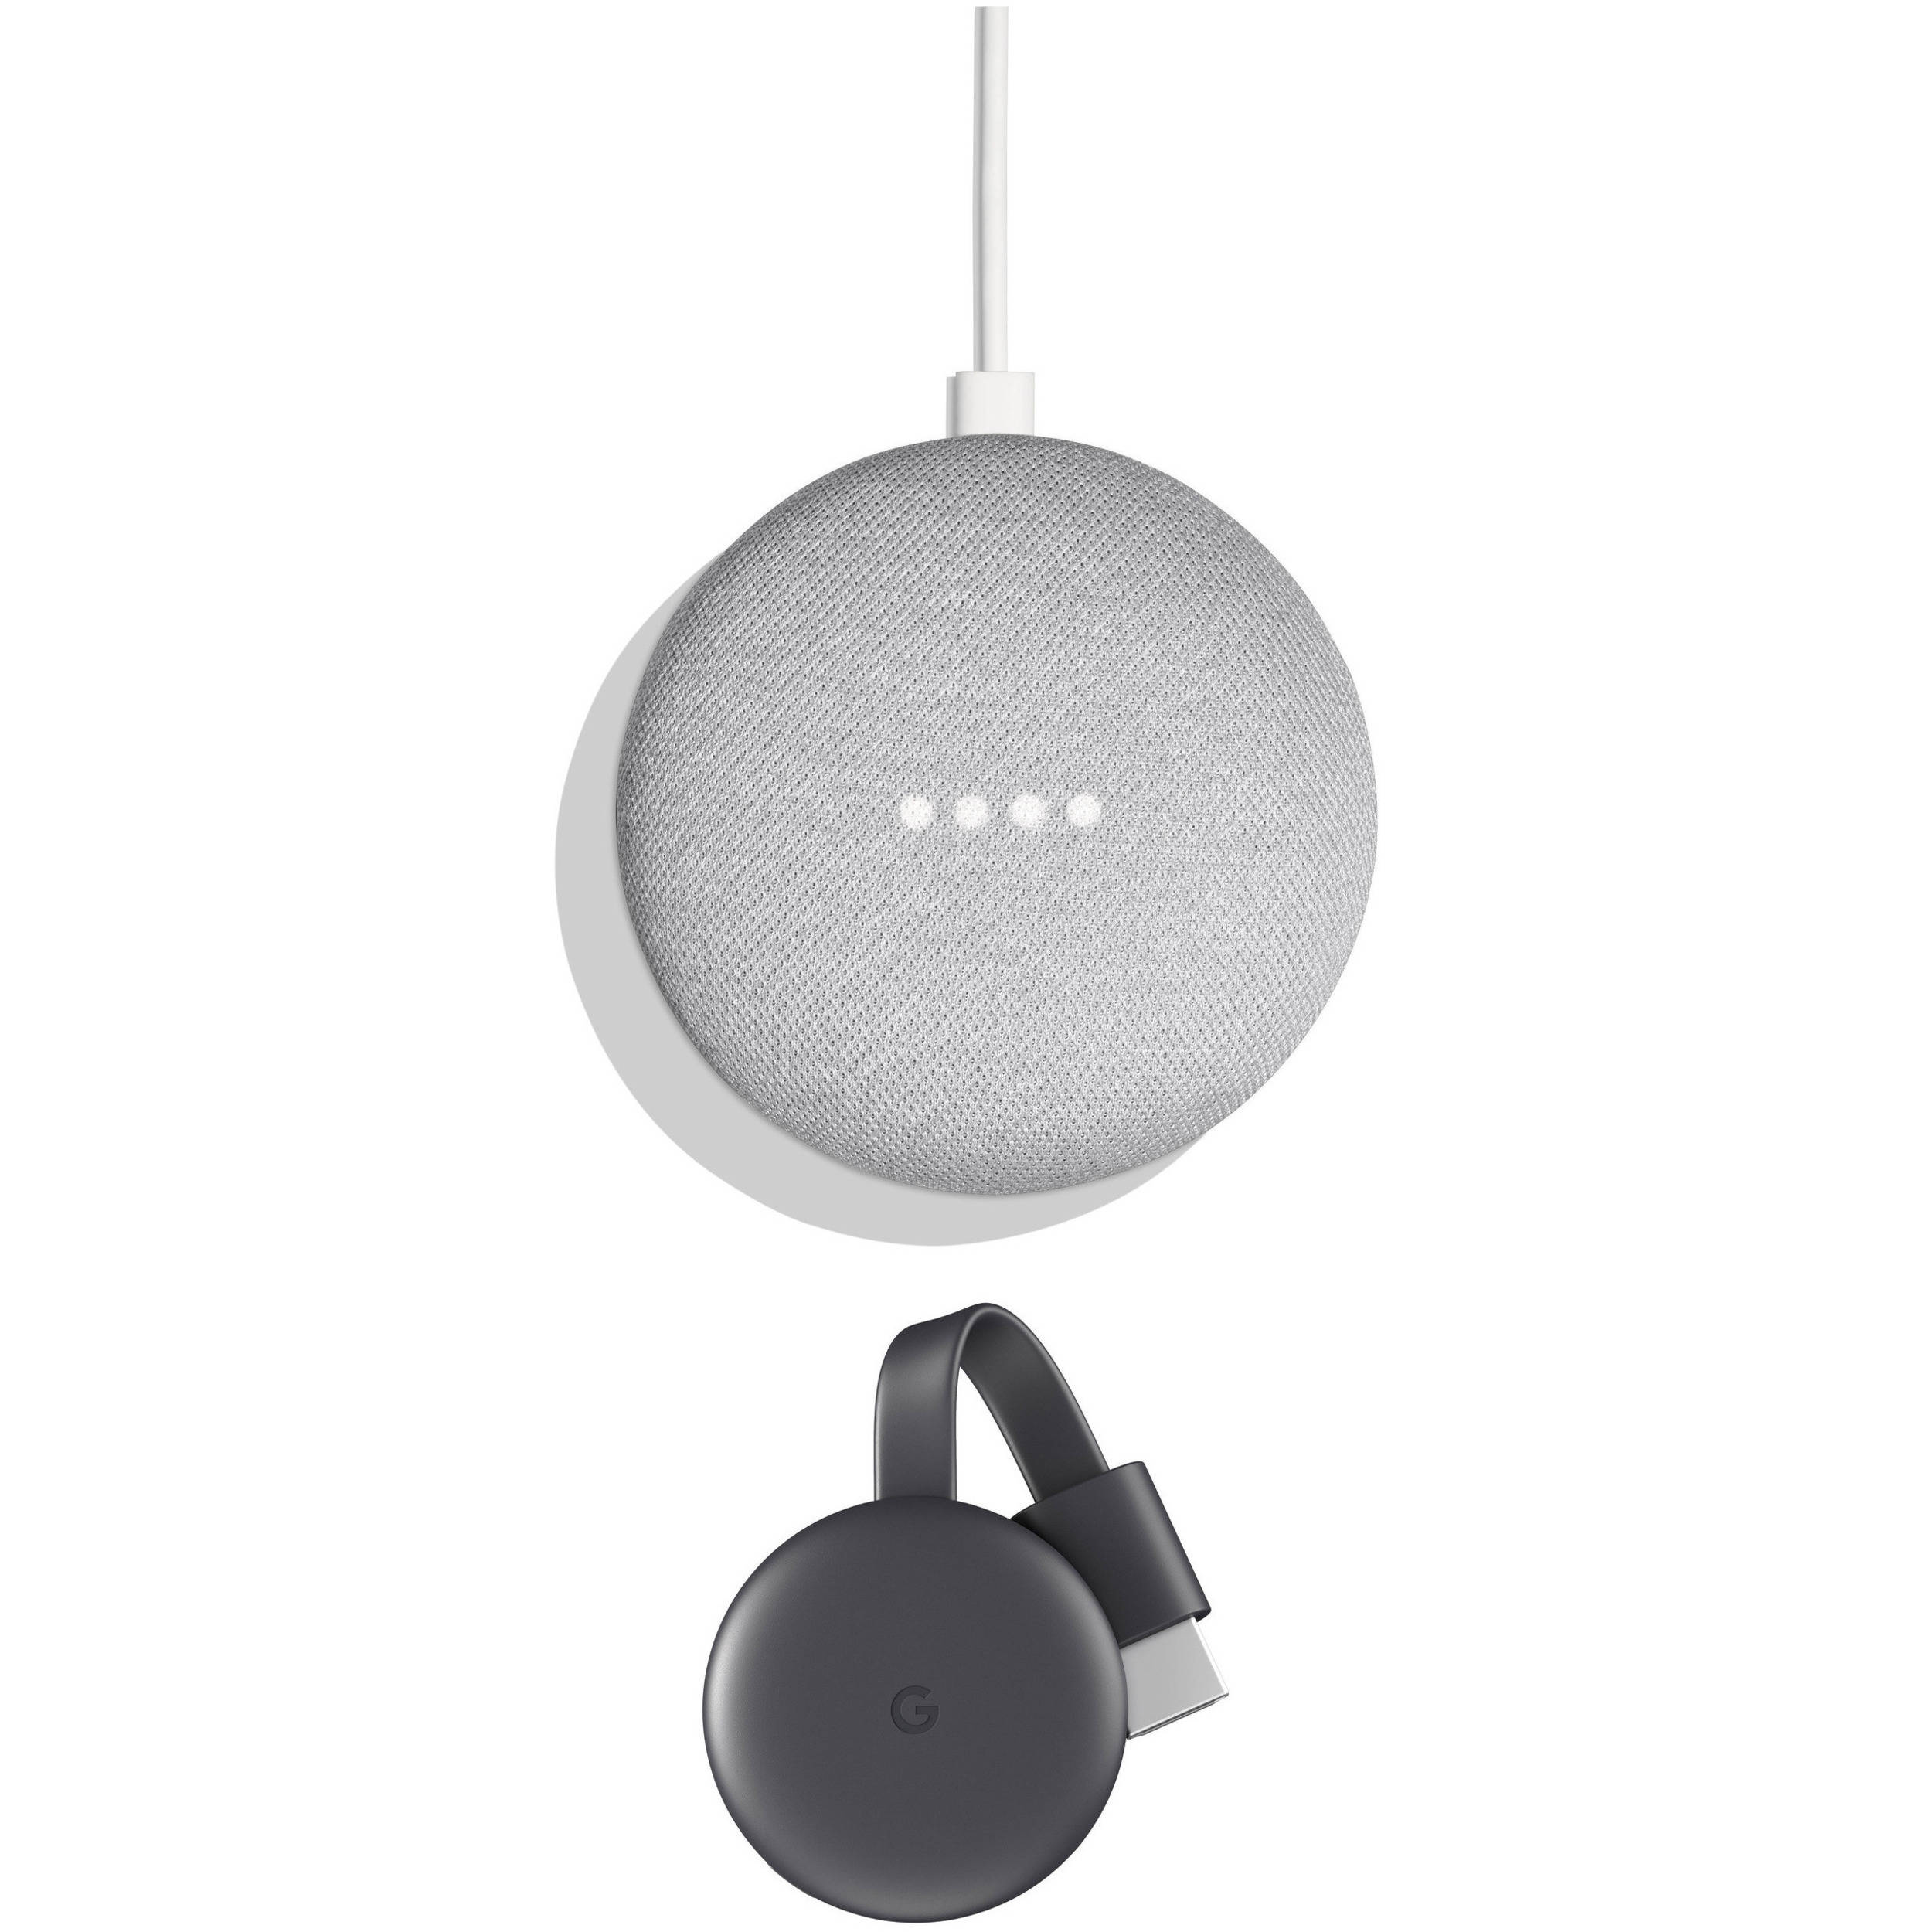 google home mini as chromecast audio